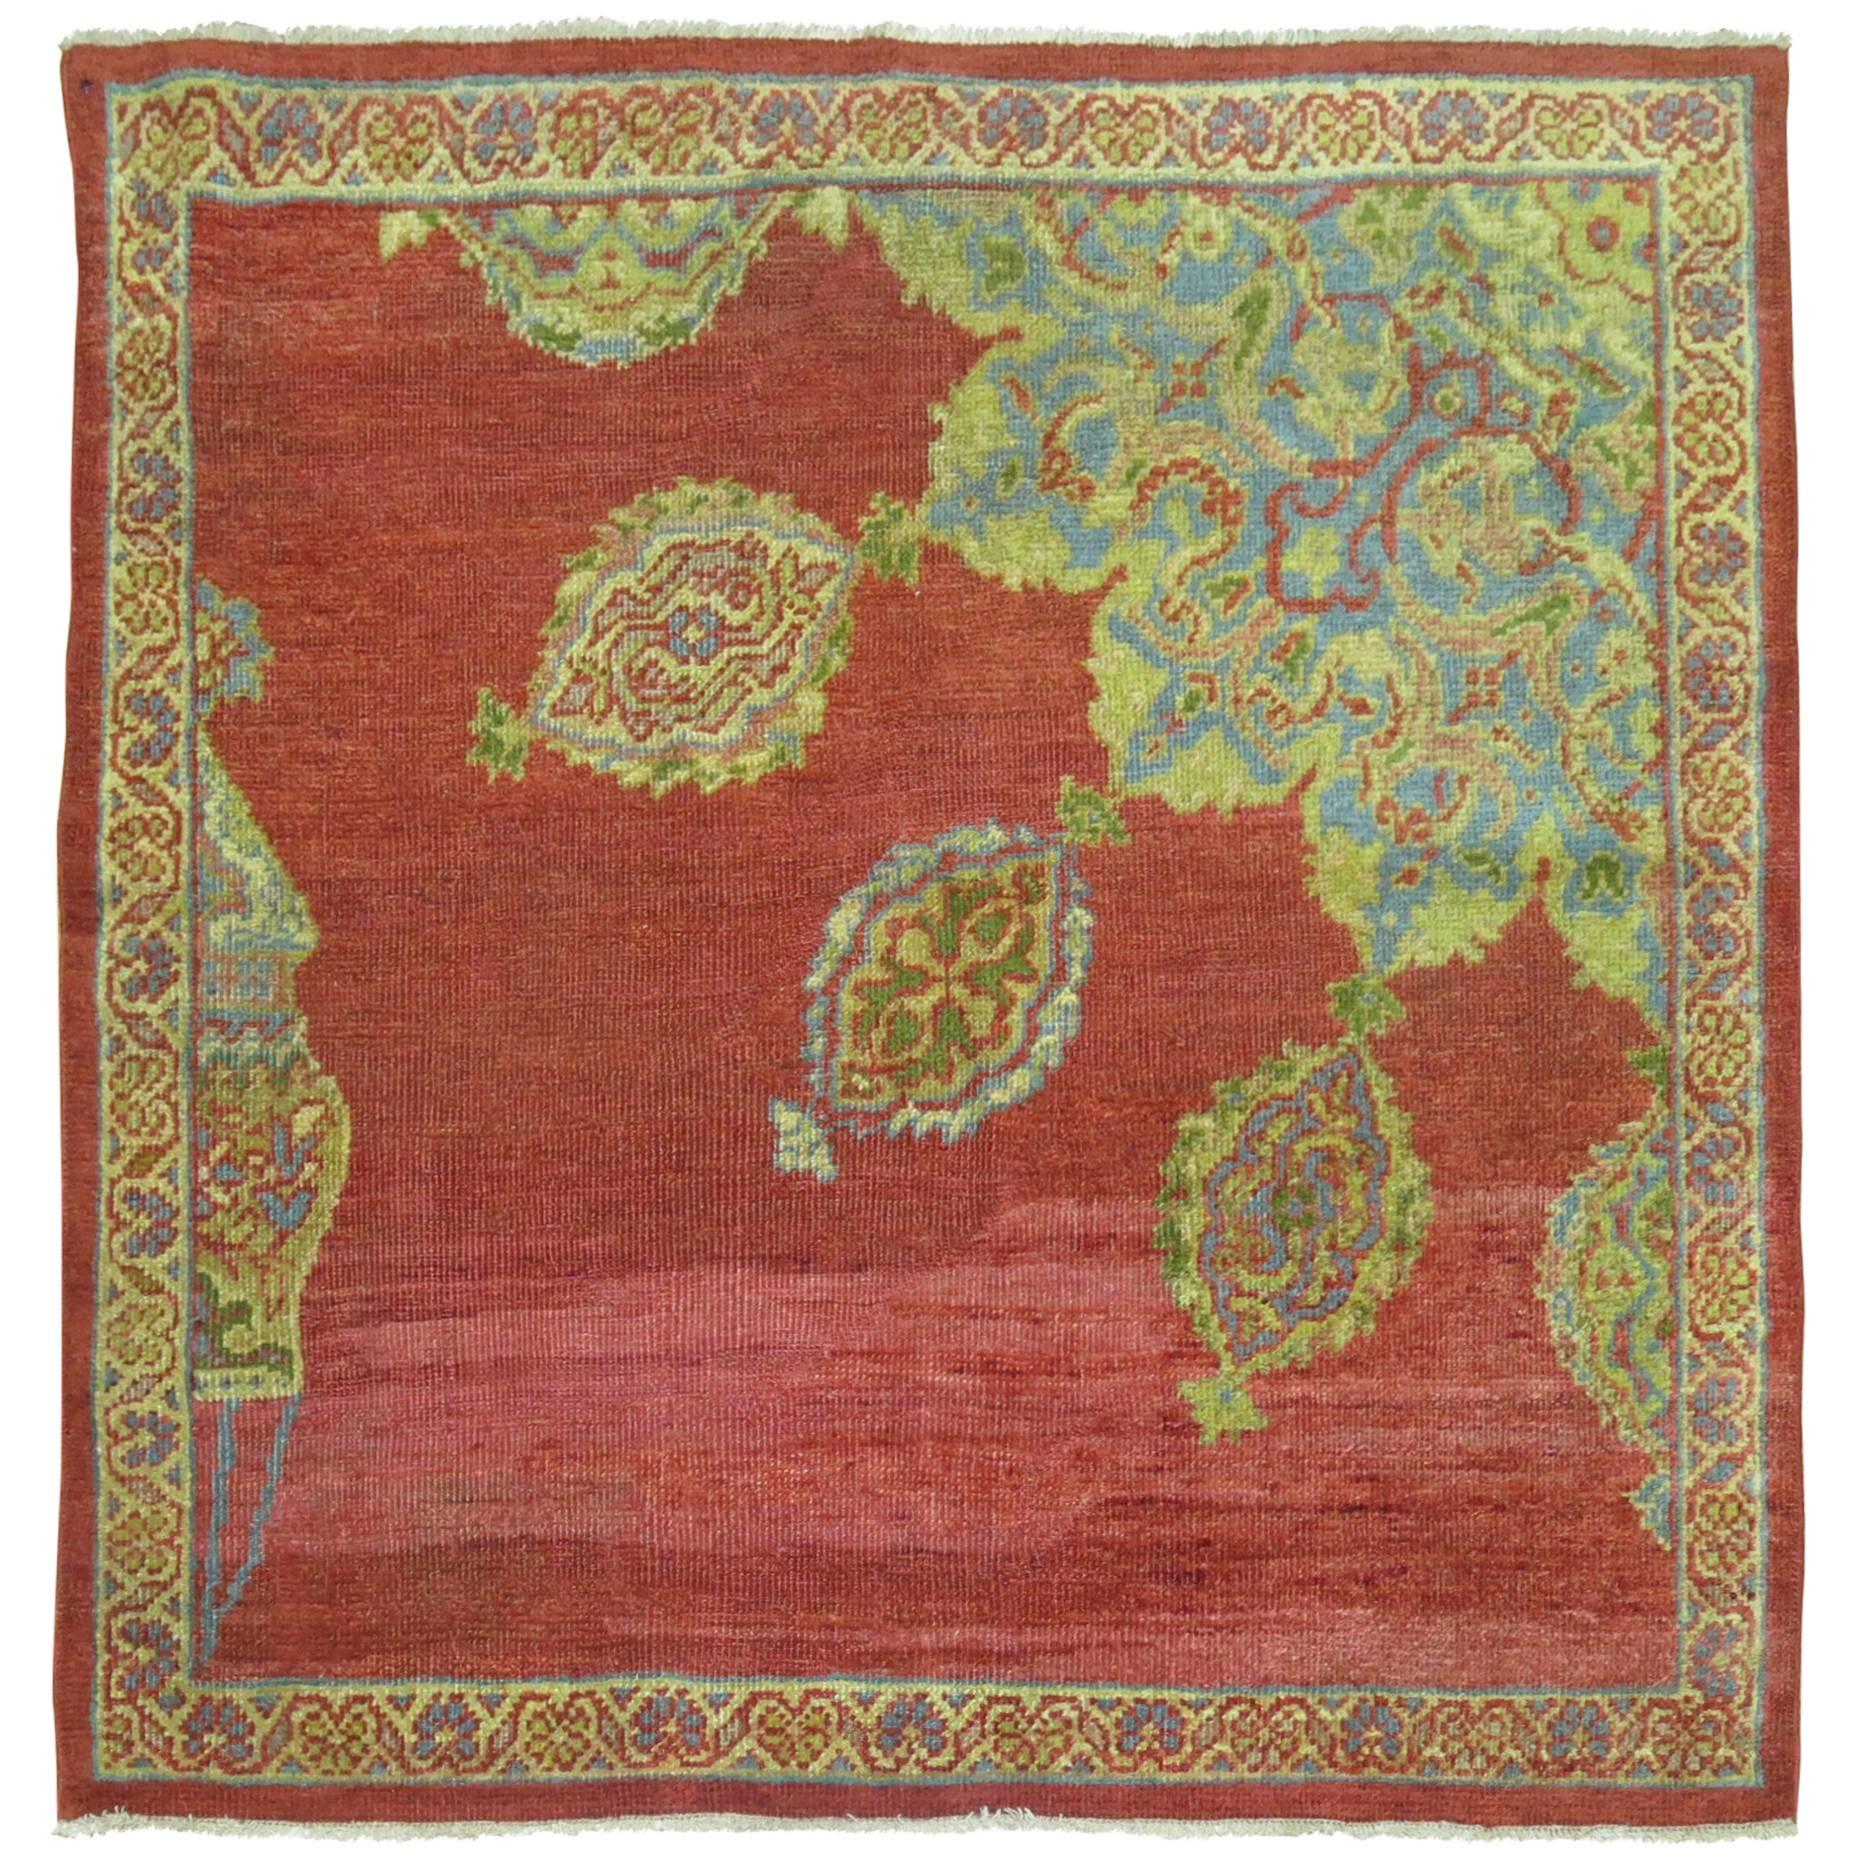 Antique Persian Ziegler Sultanabad Sampler Rug